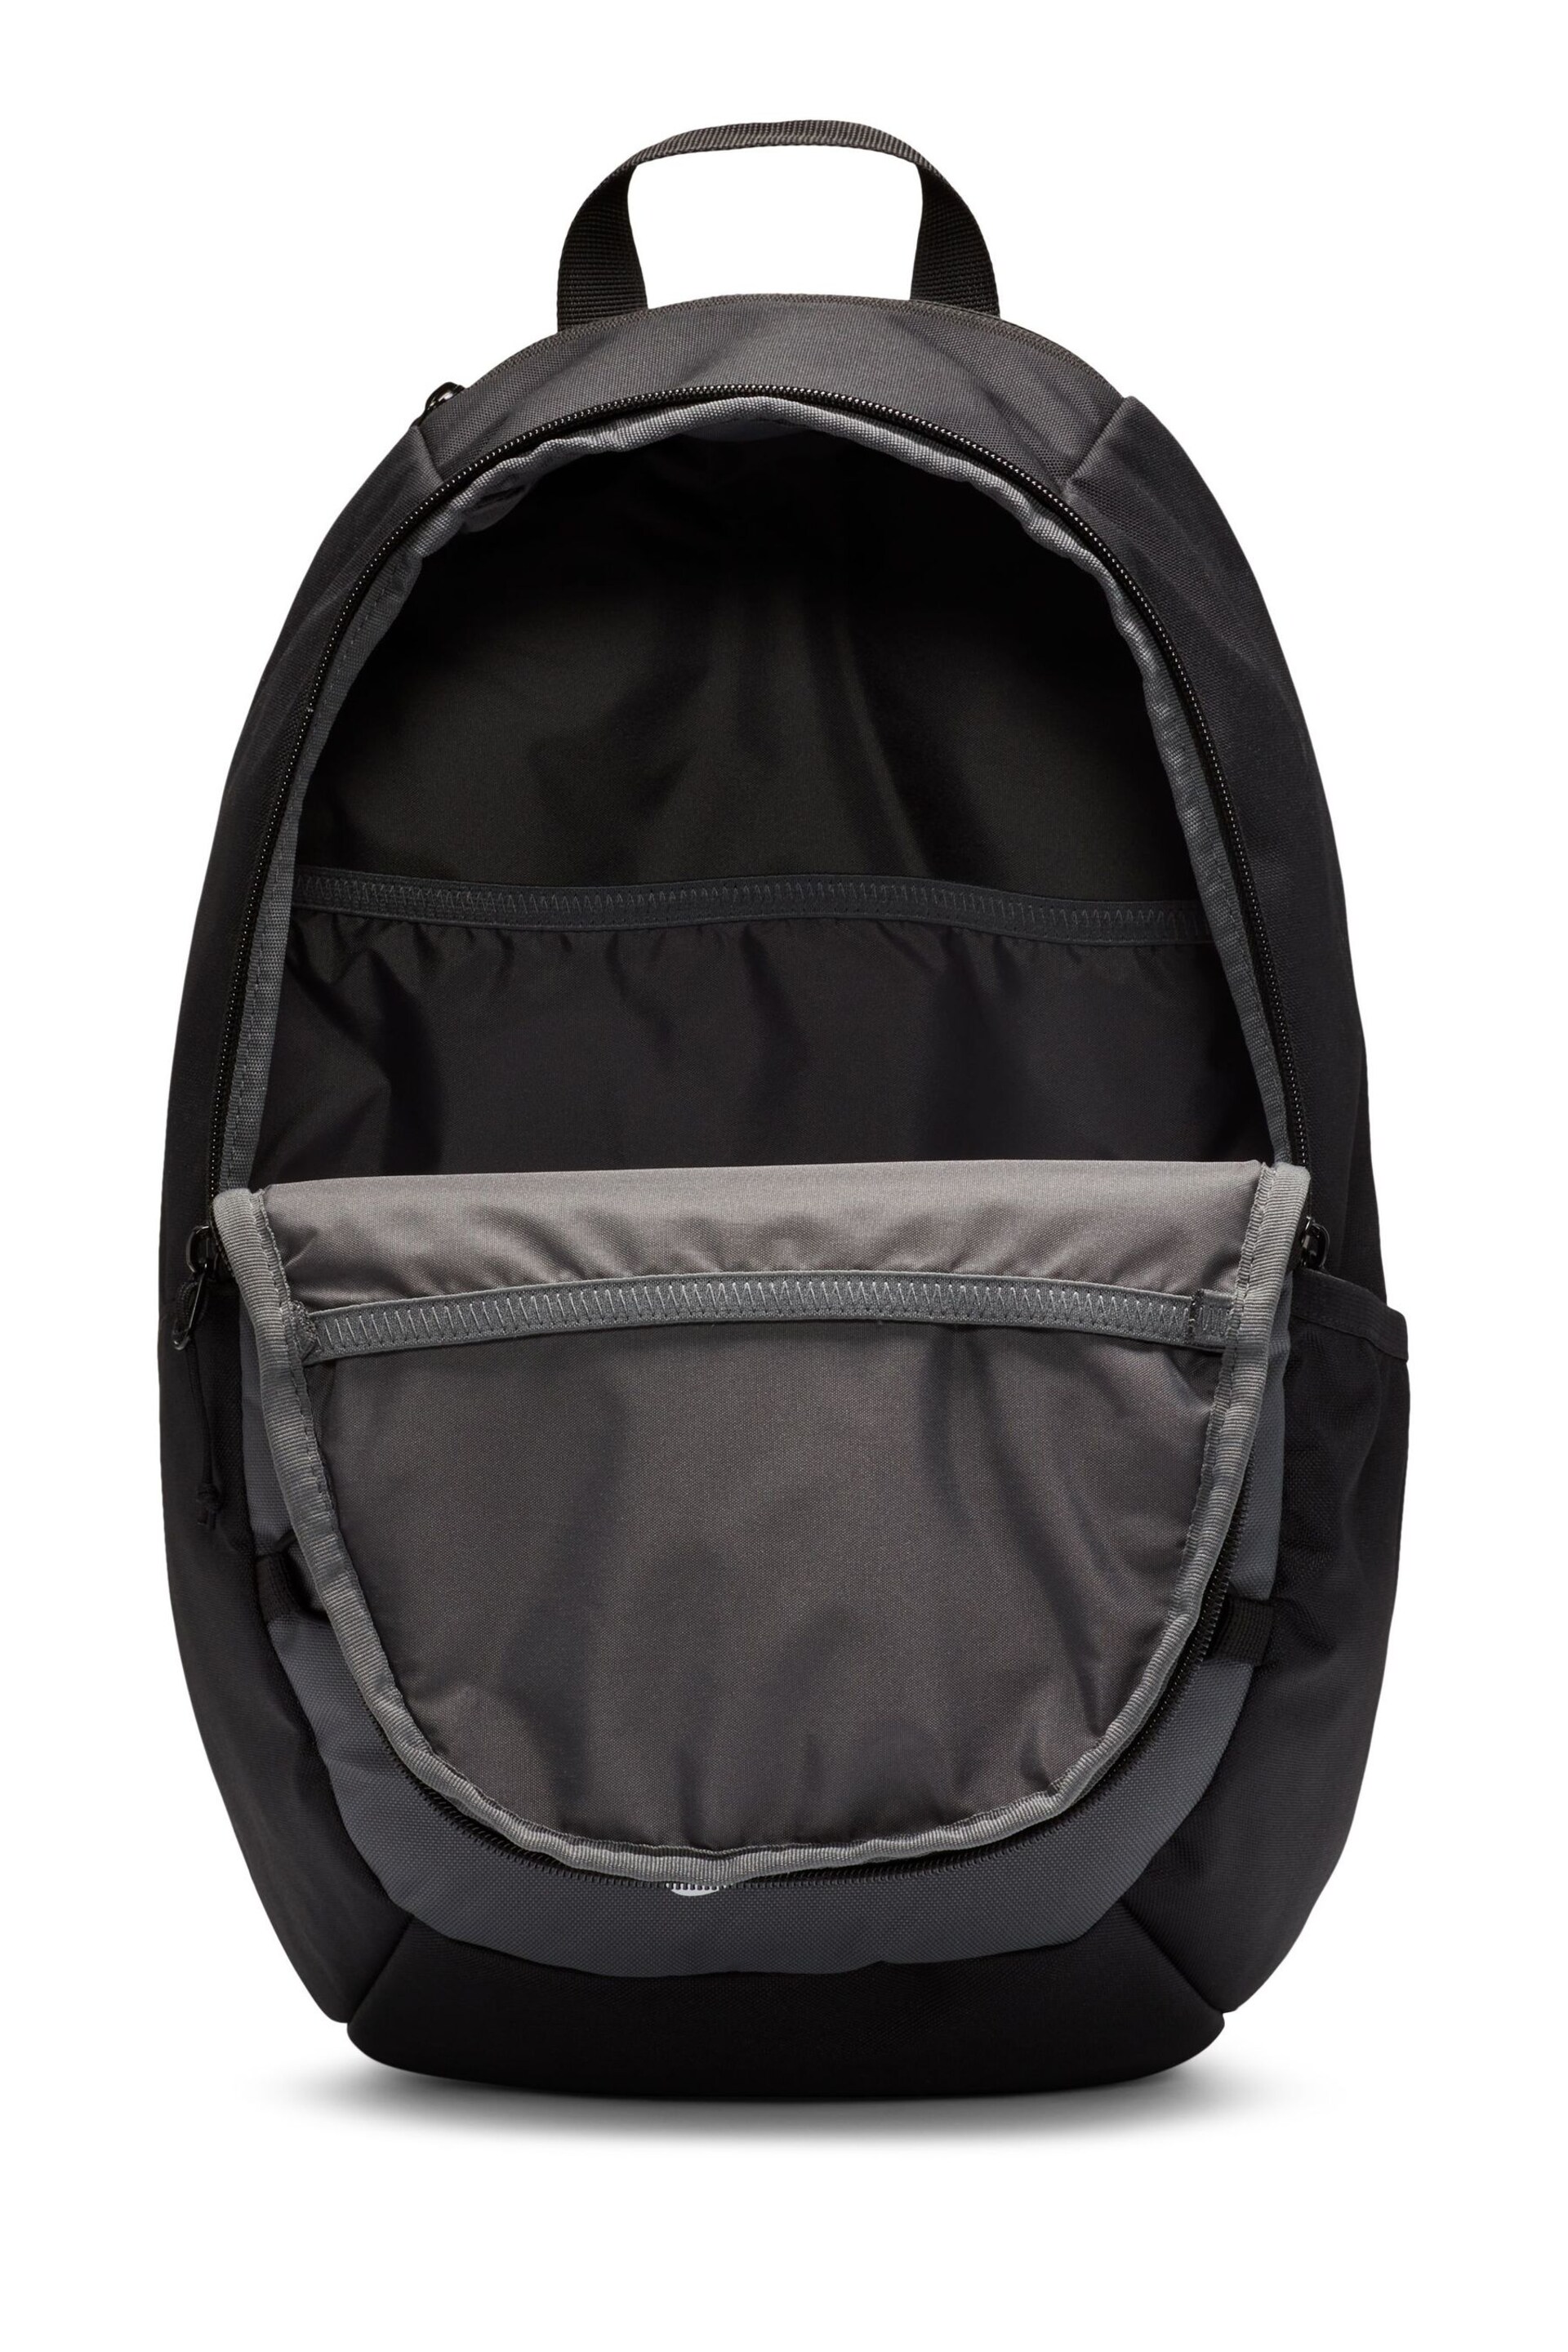 Nike Black Air GRX Backpack - Image 6 of 9